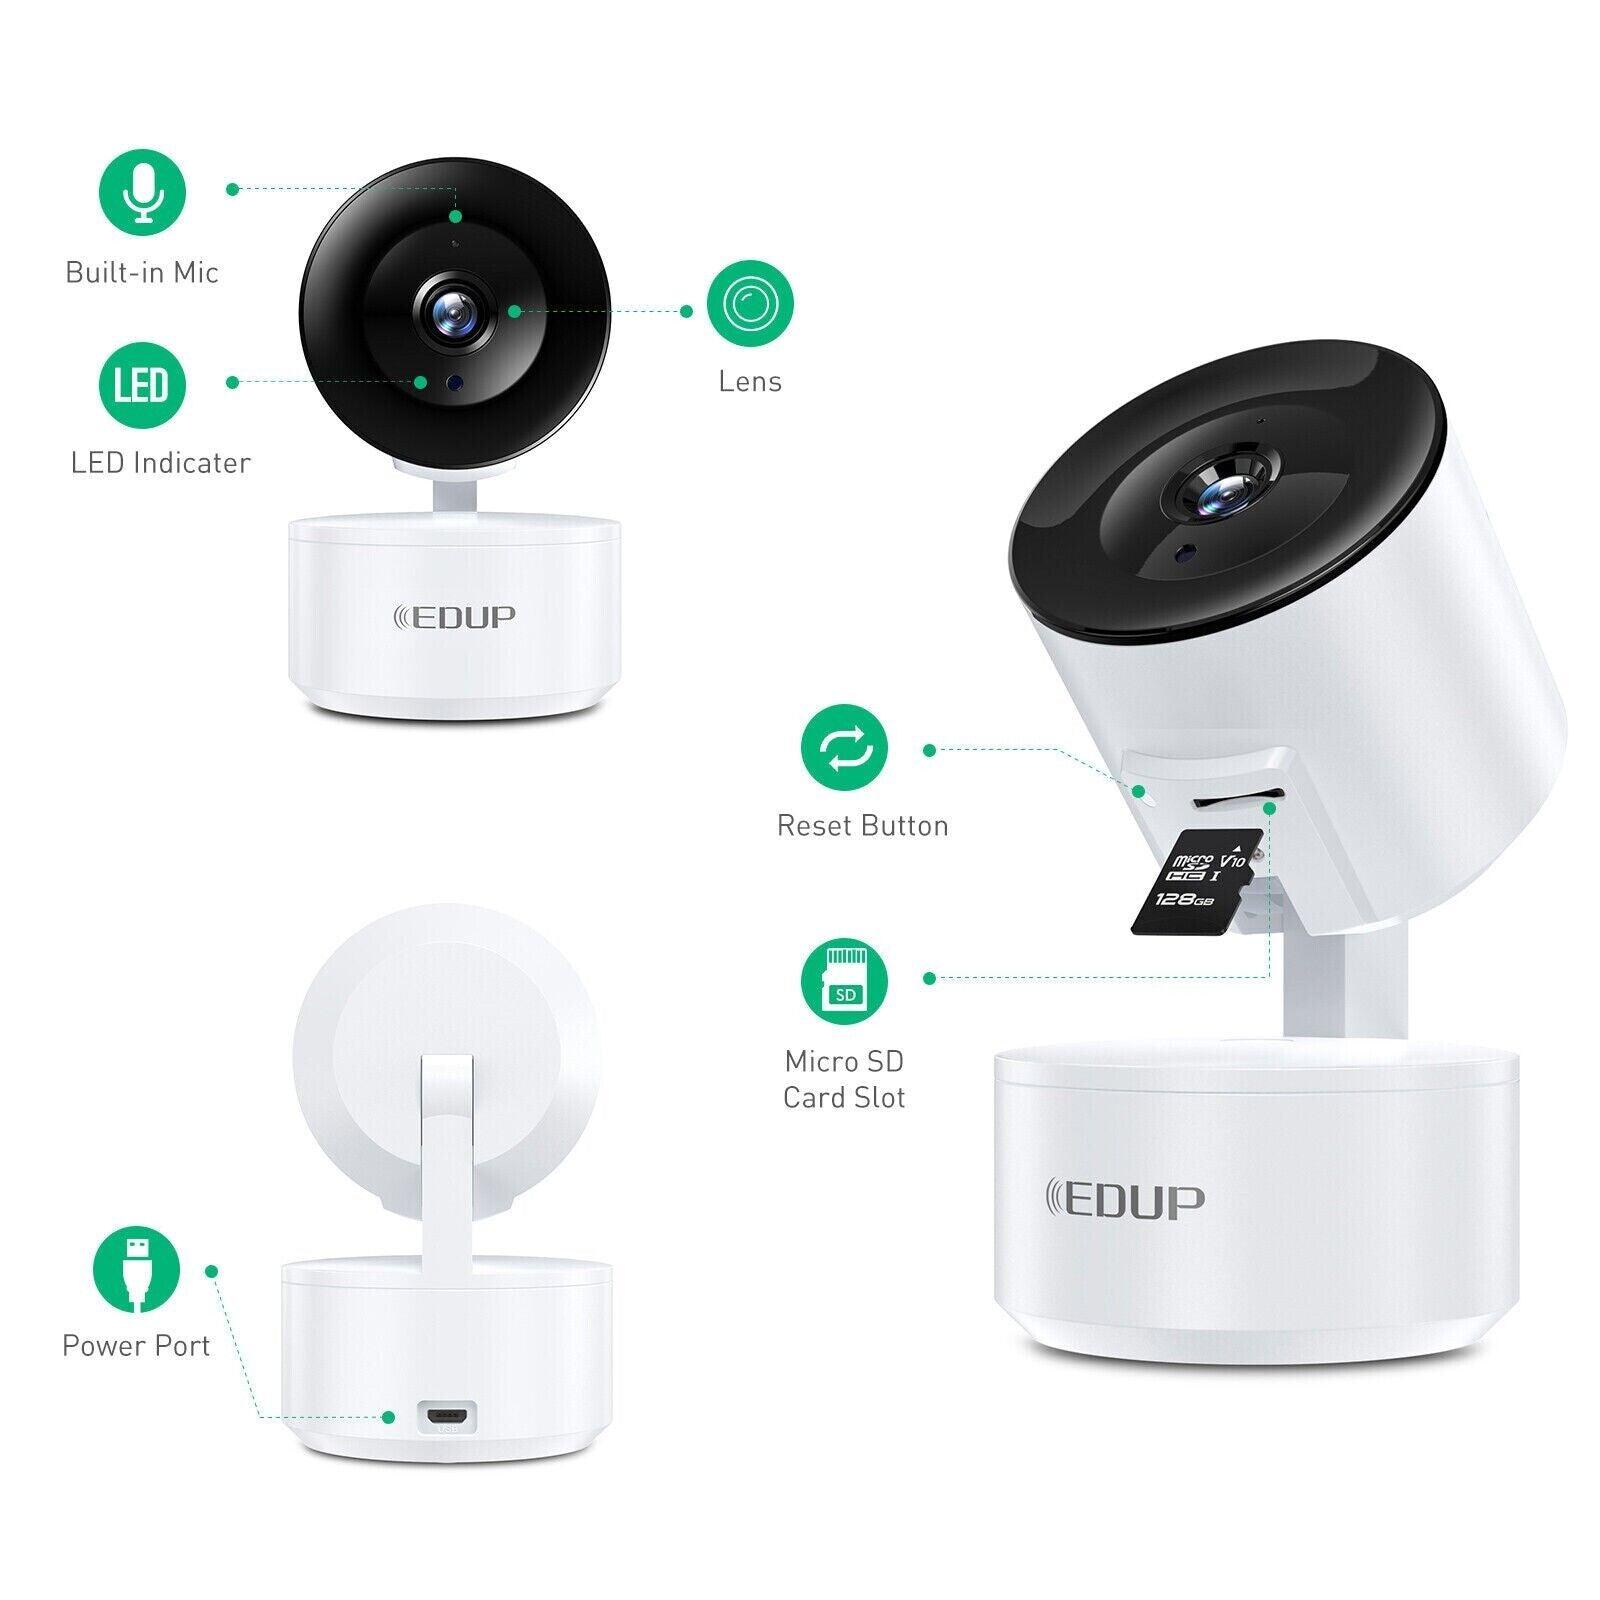 WiFi IP Camera 1080P Indoor Human Detection IR Night Vision Audio - Massive Discounts